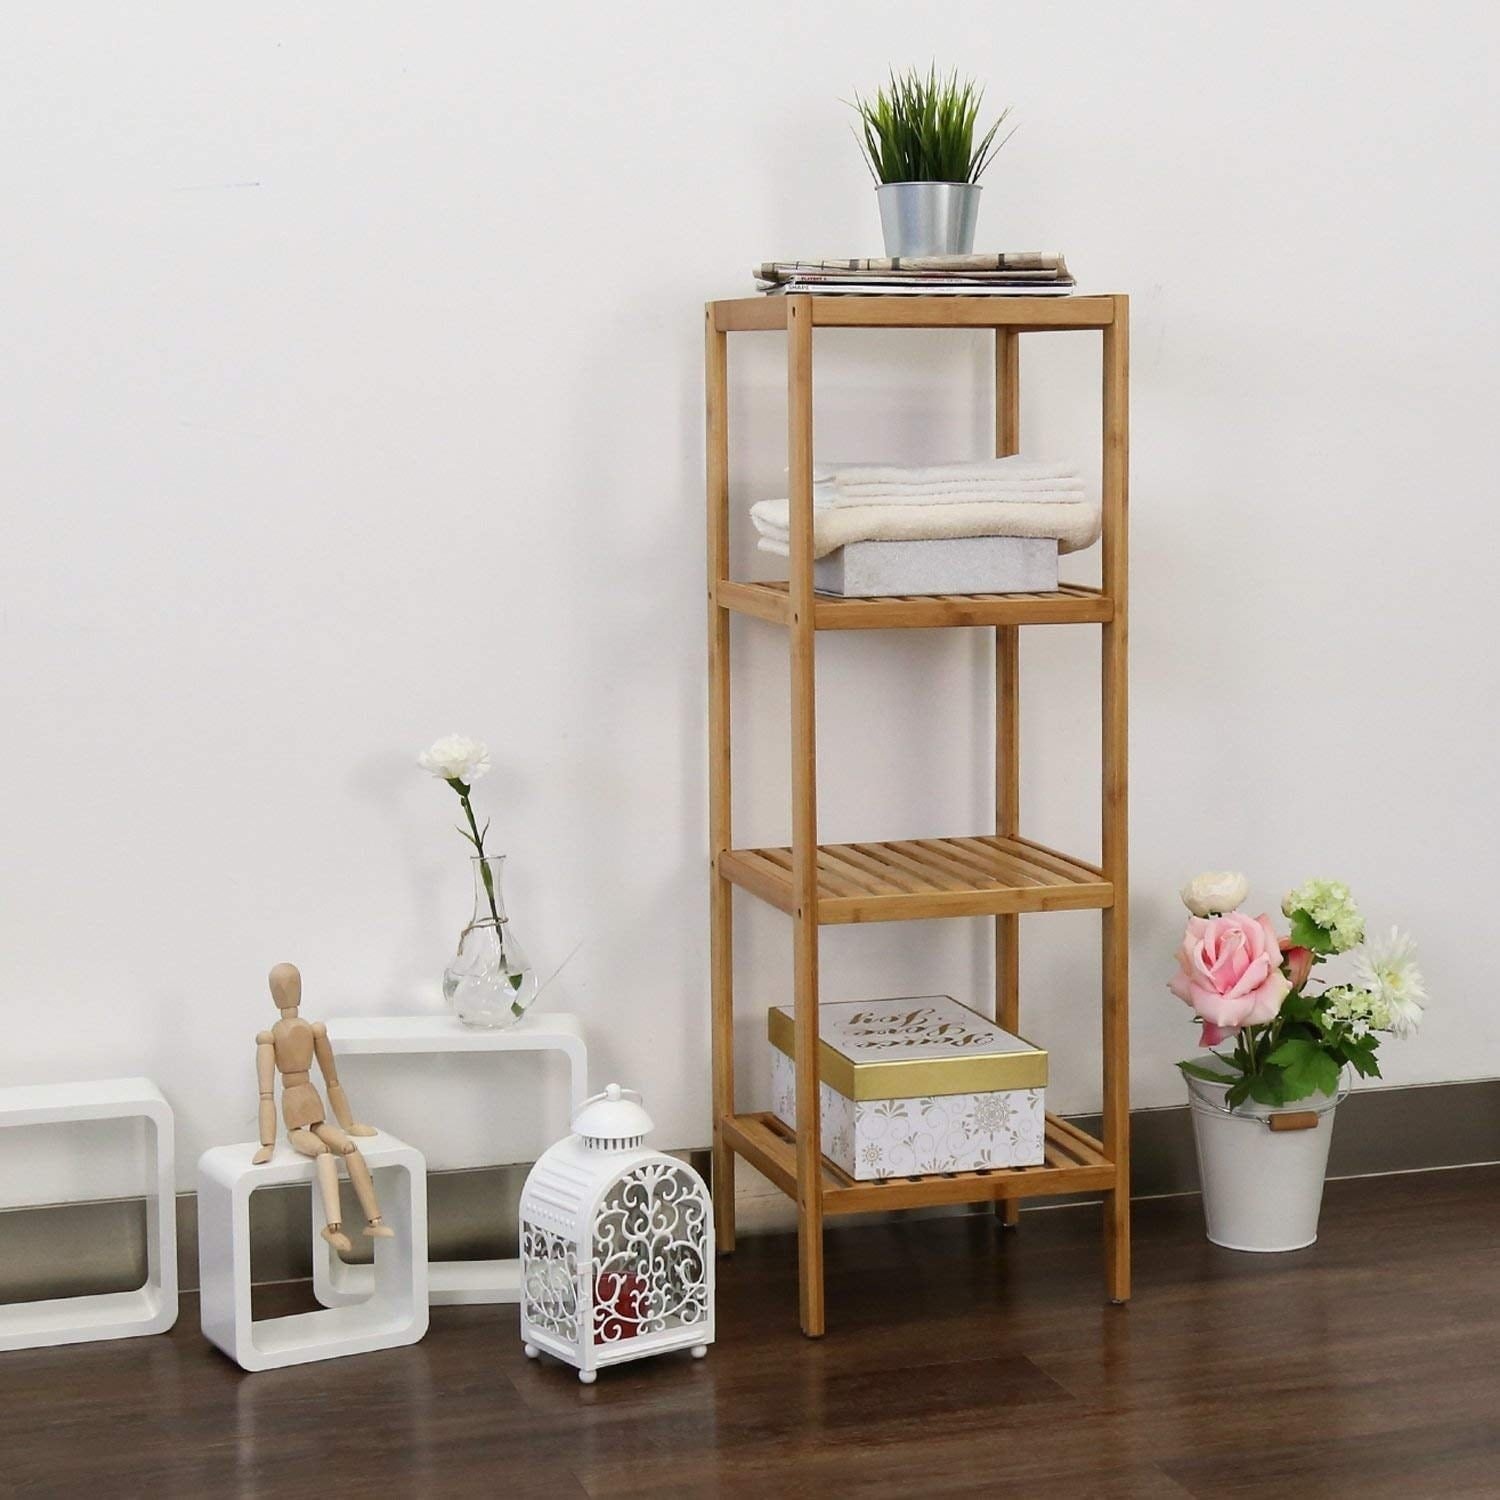 Kinbor 4 Tier Bamboo Bathroom Shelf Towel Rack Storage Shelving On Sale Overstock 26053848 Wood1